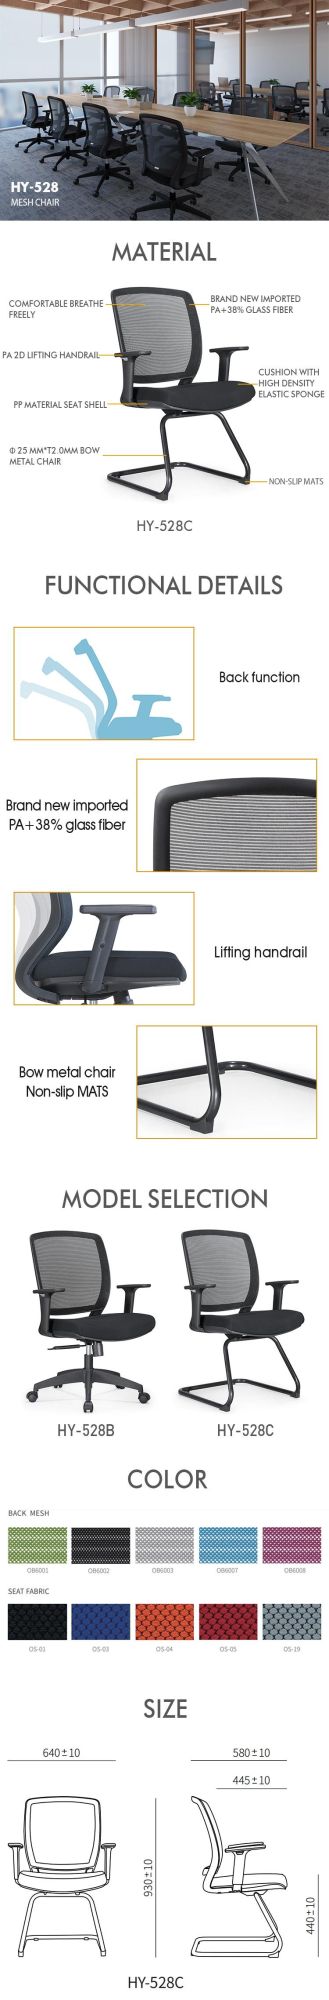 Black Color Breathable Mesh MID-Back Ergonomic Chair